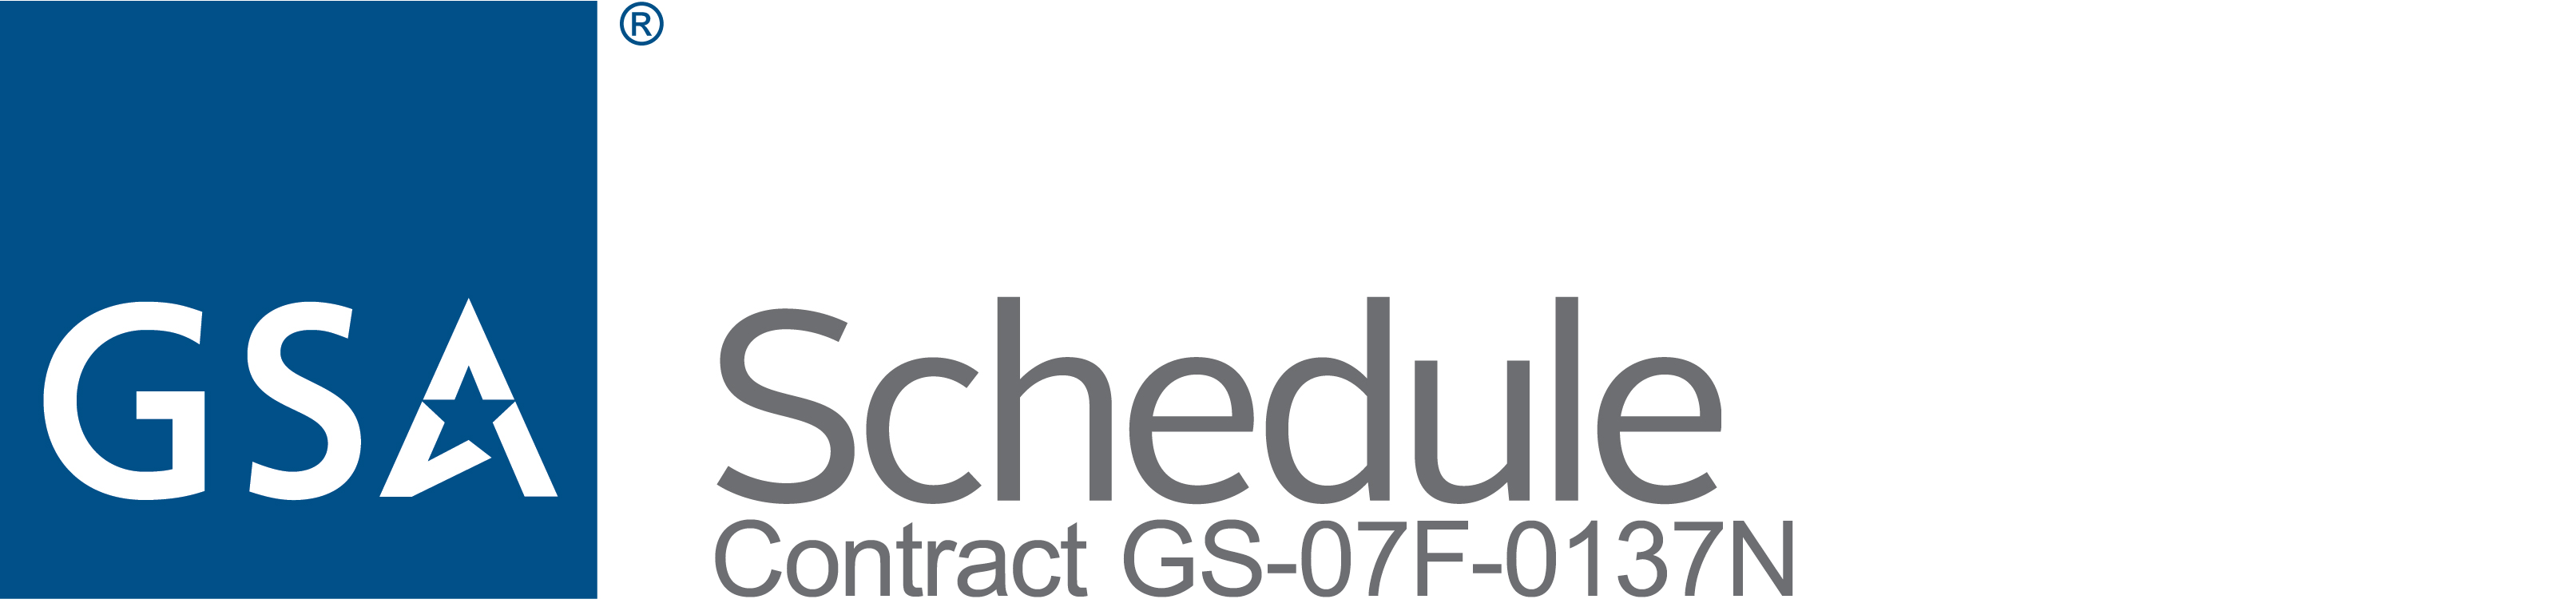 GSA Schedule Contract GS-07F-0137N